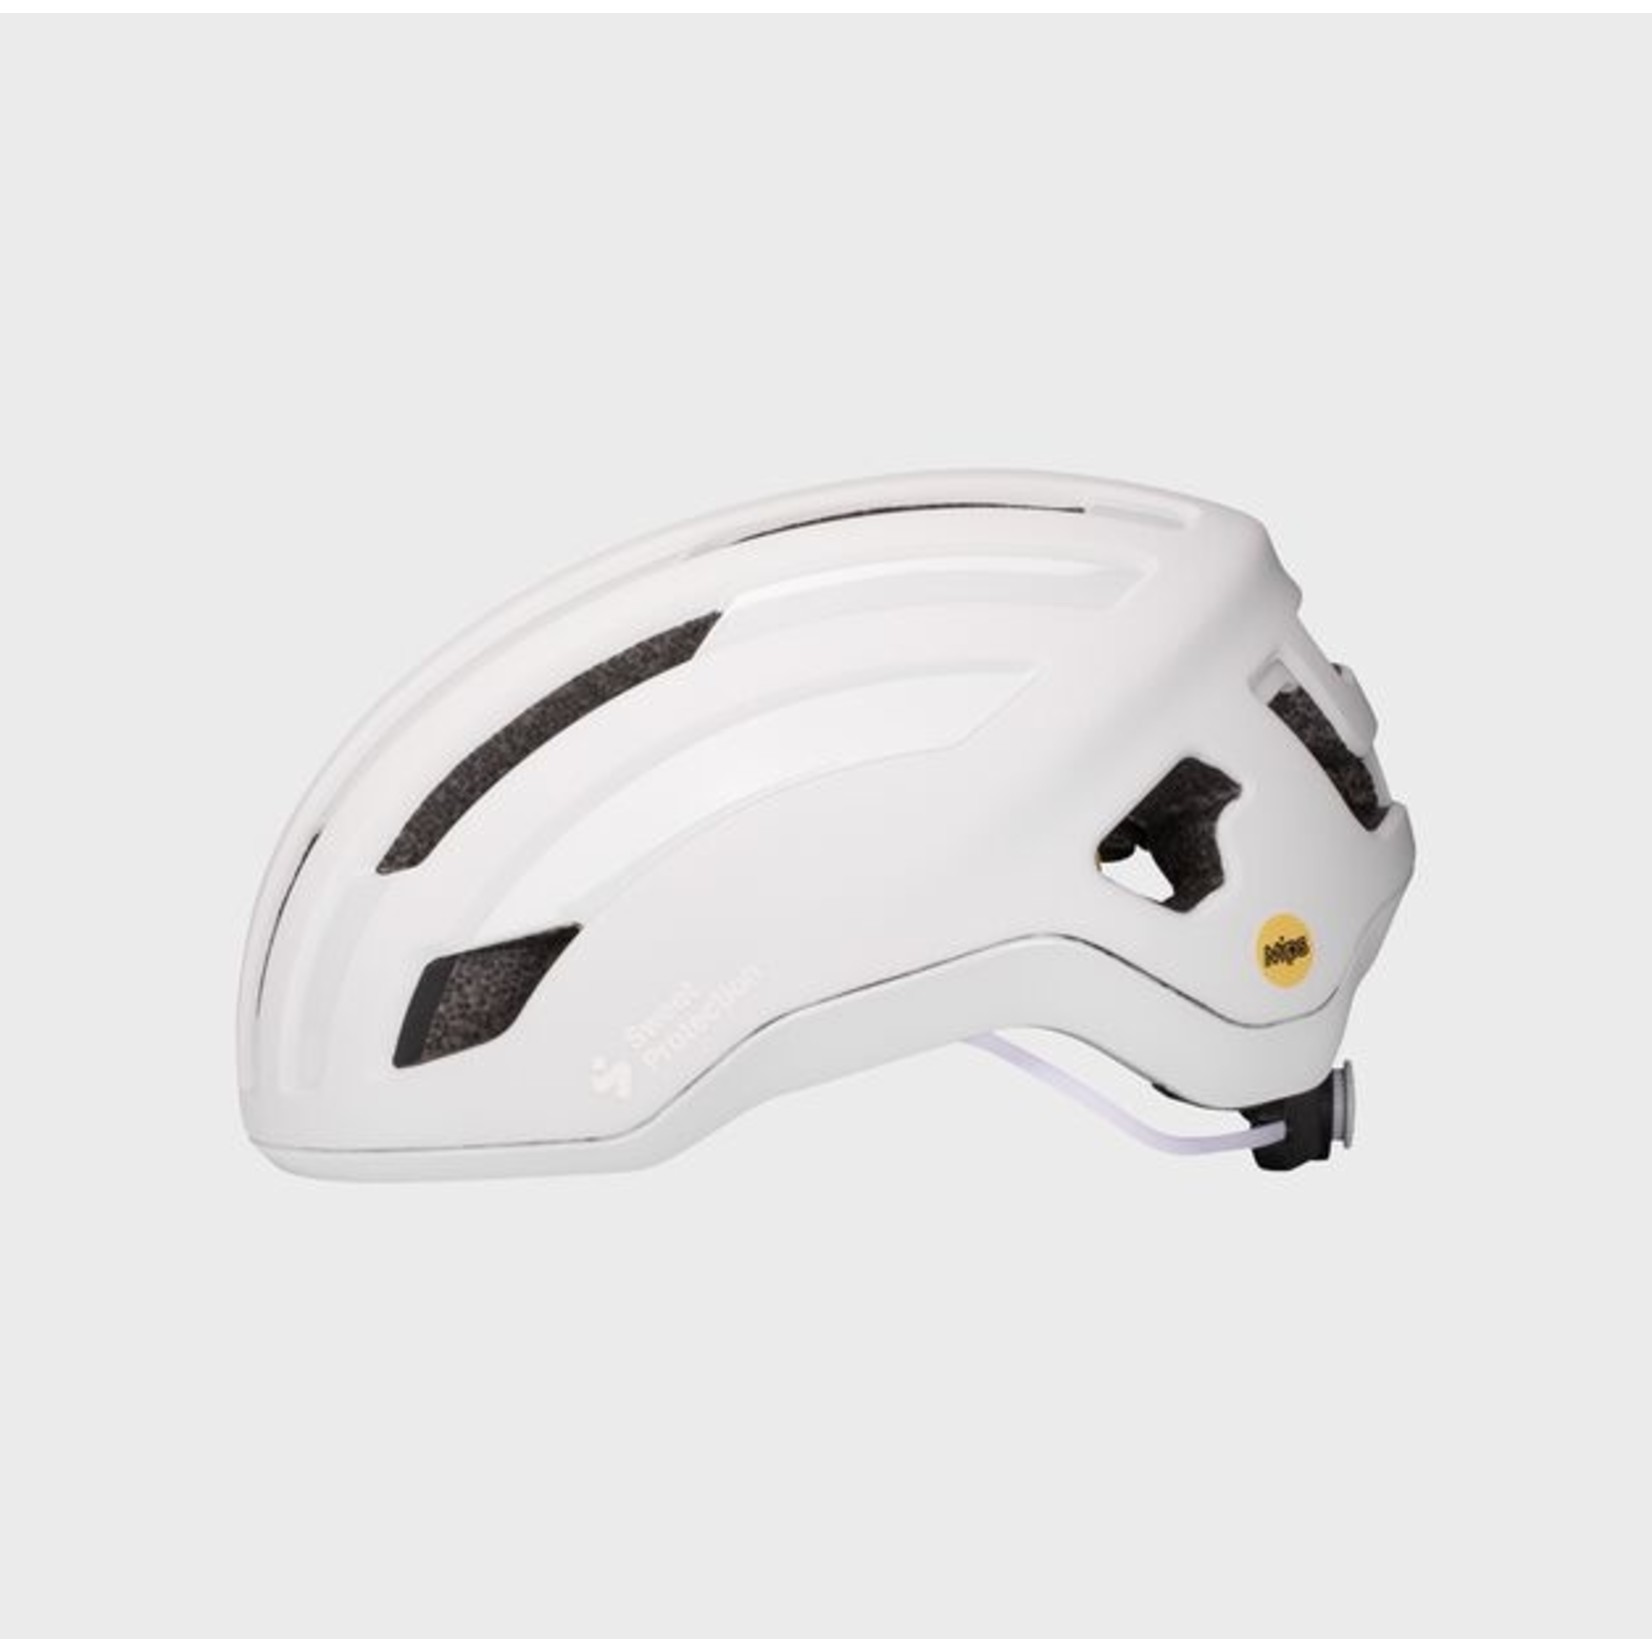 Outrider MIPS Helmet